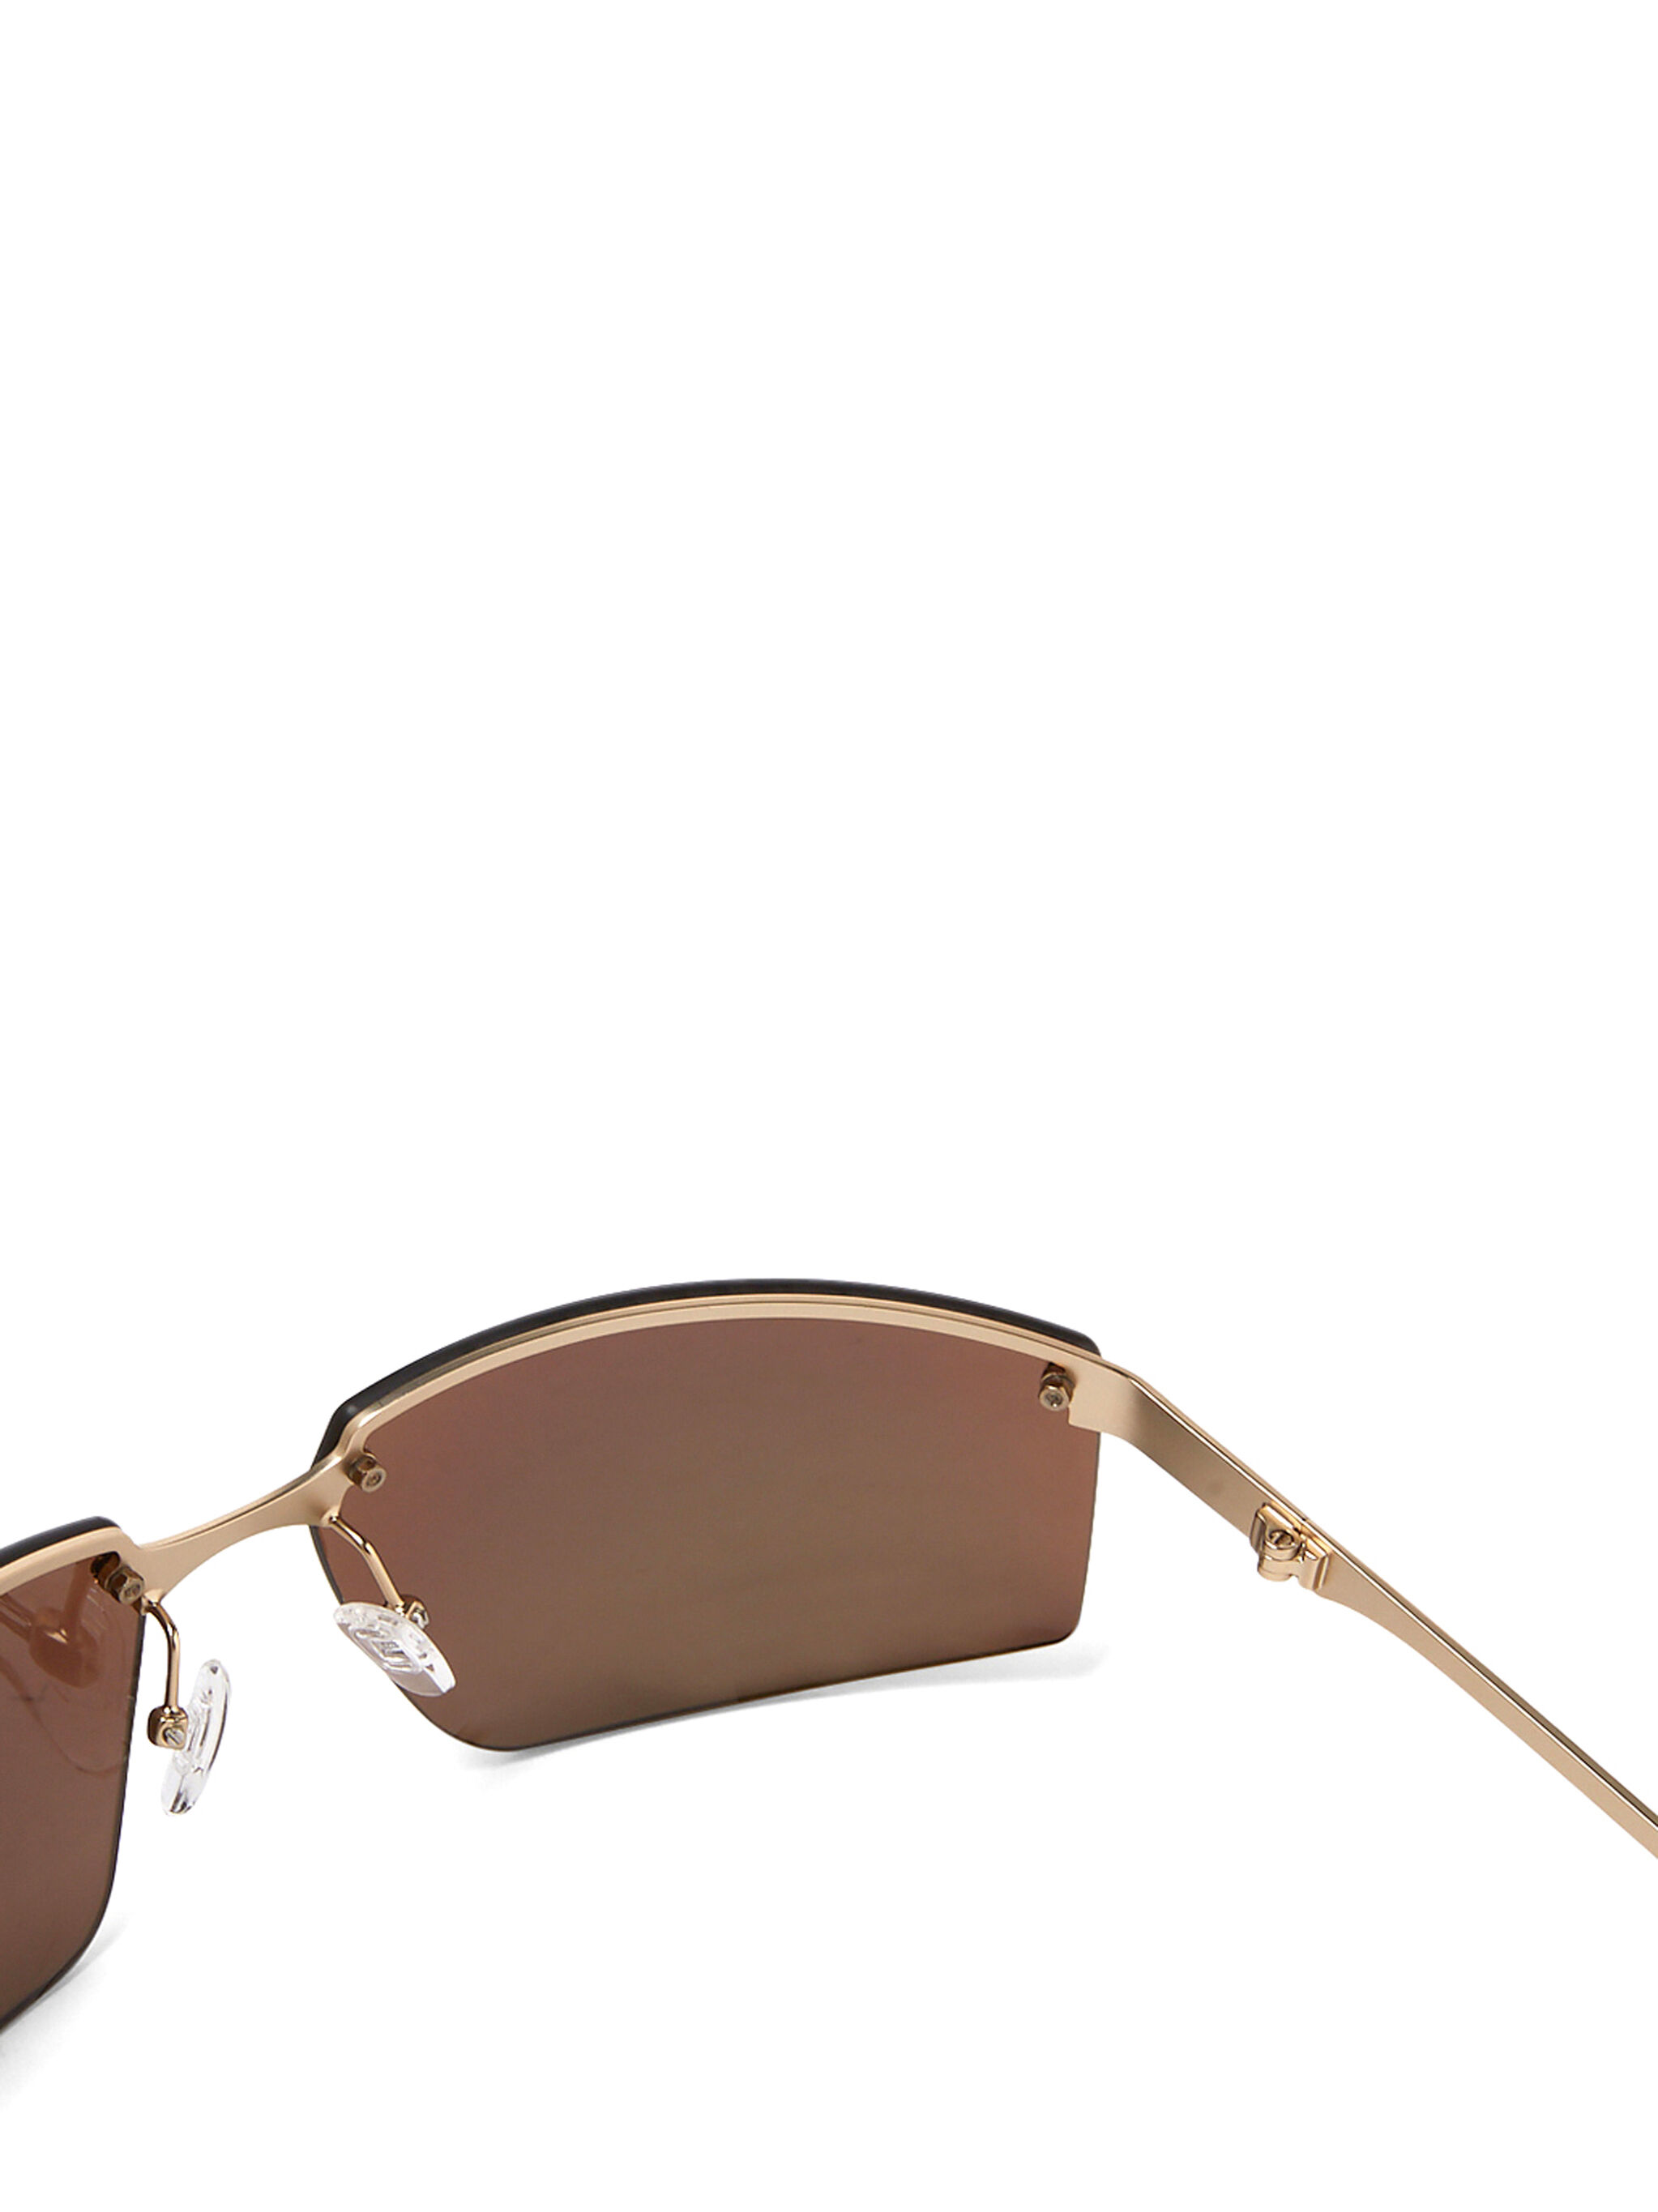 Eytys Aero Sunglasses in Gold | THE FLAMEL®